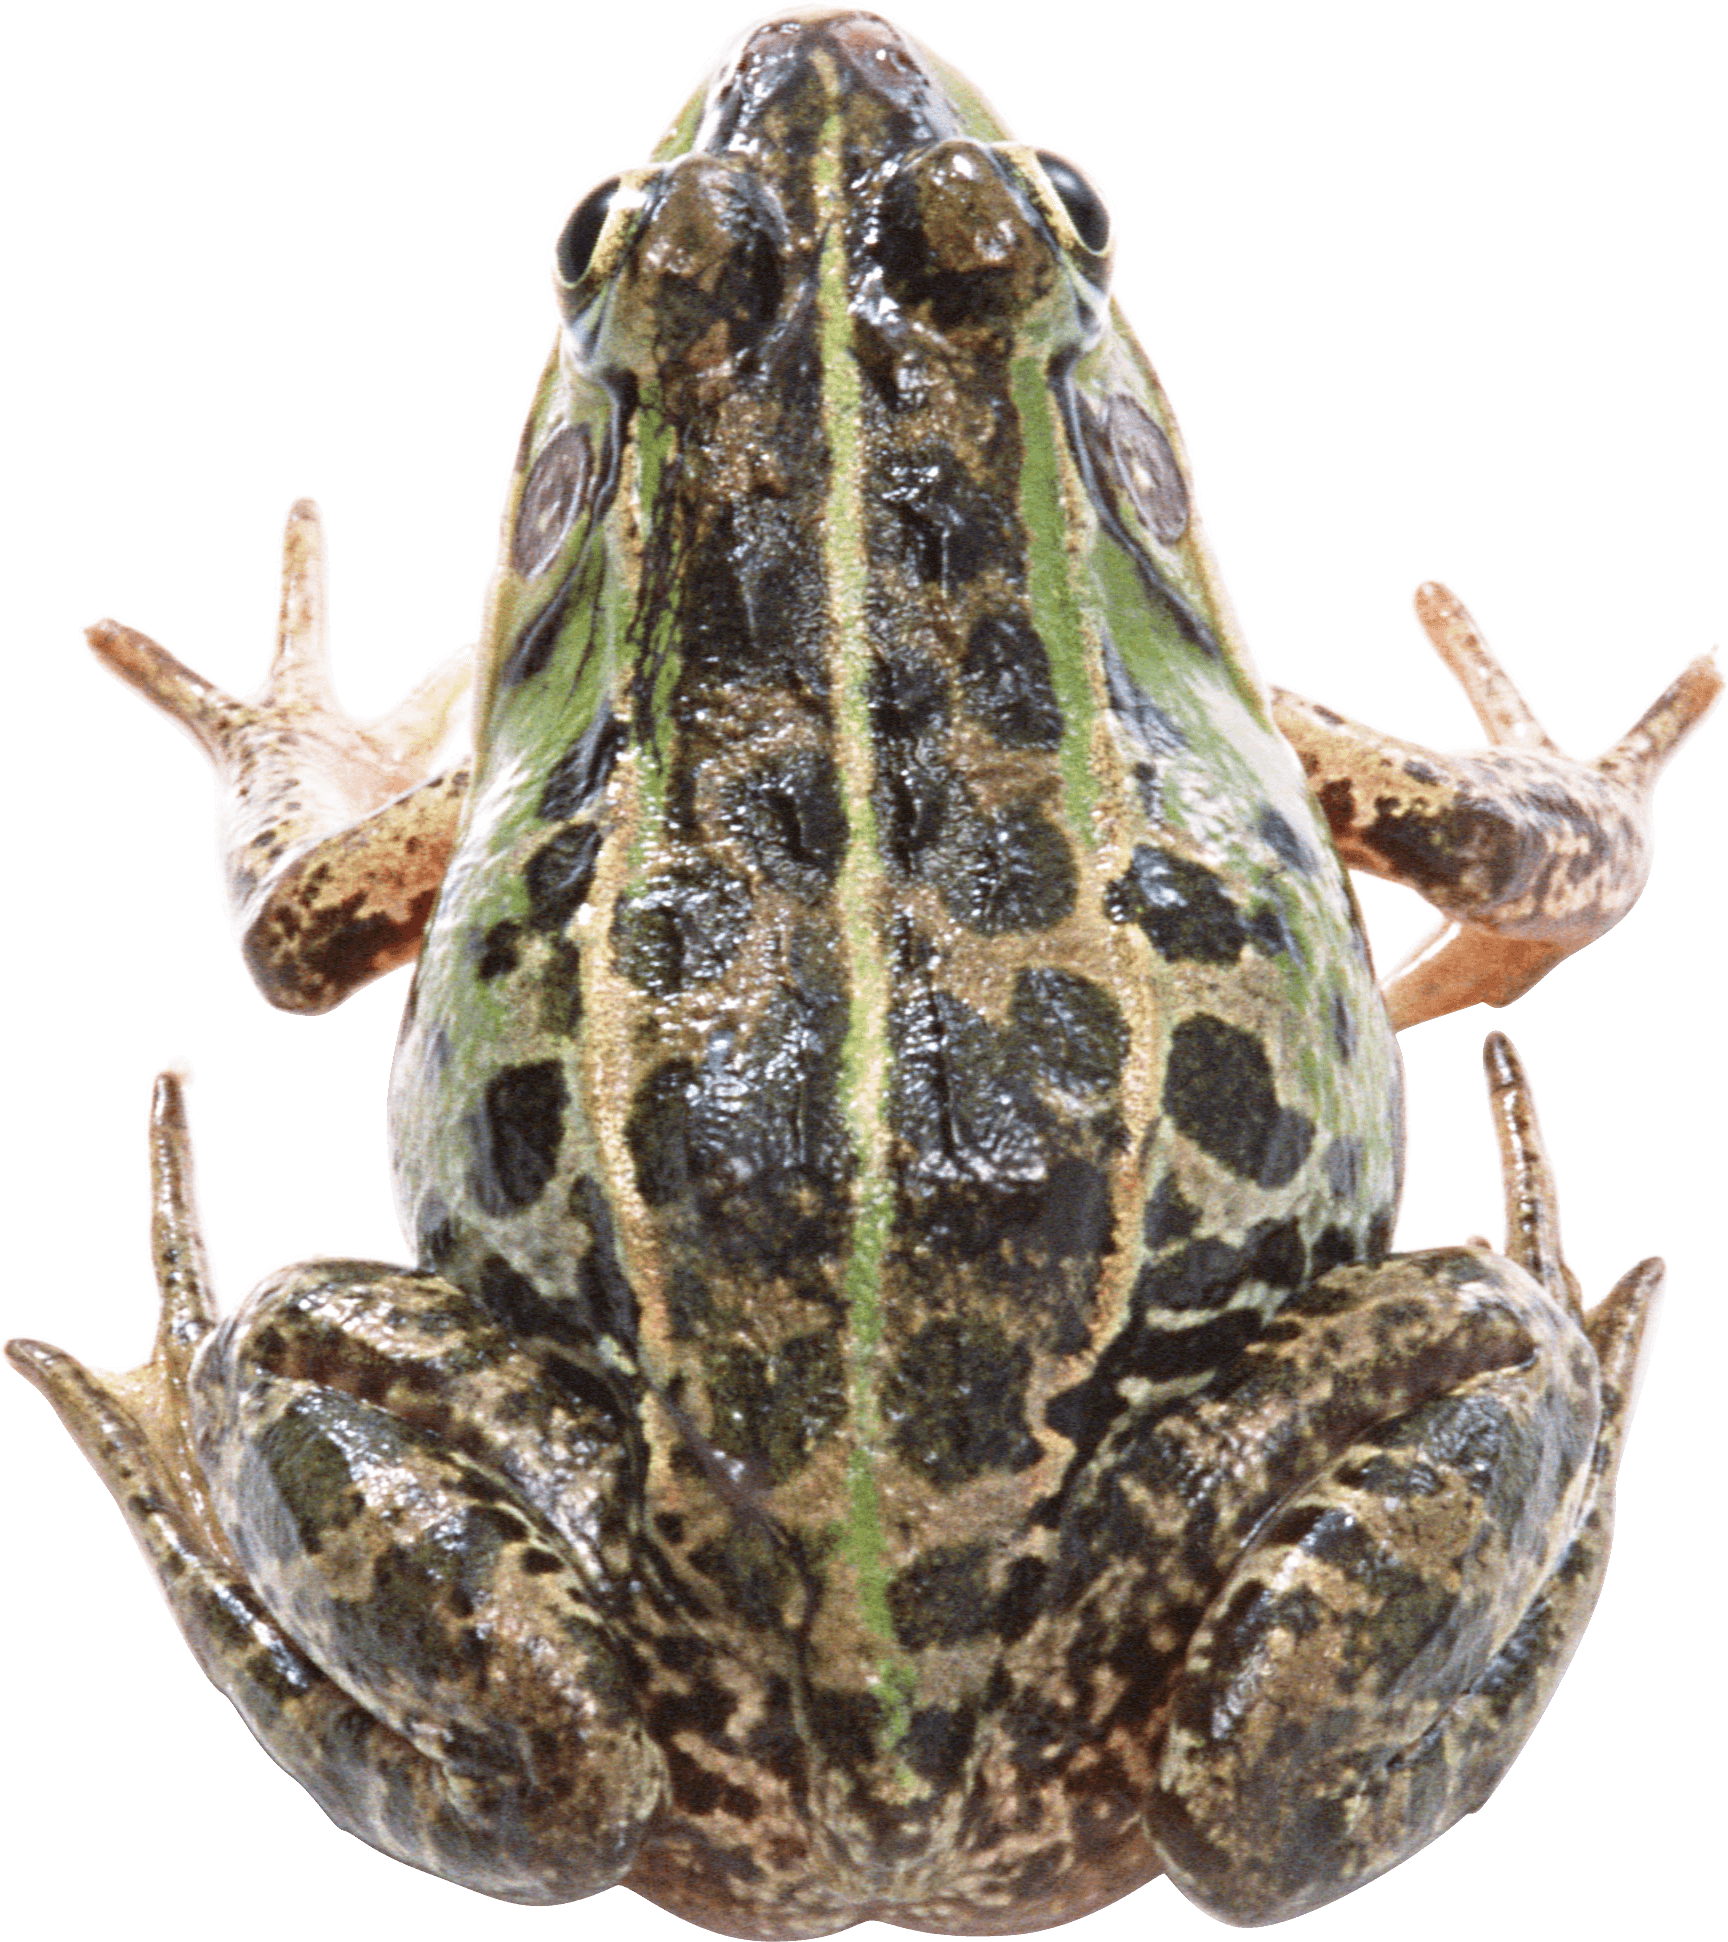 black frog PNG Image - PurePNG | Free transparent CC0 PNG ...